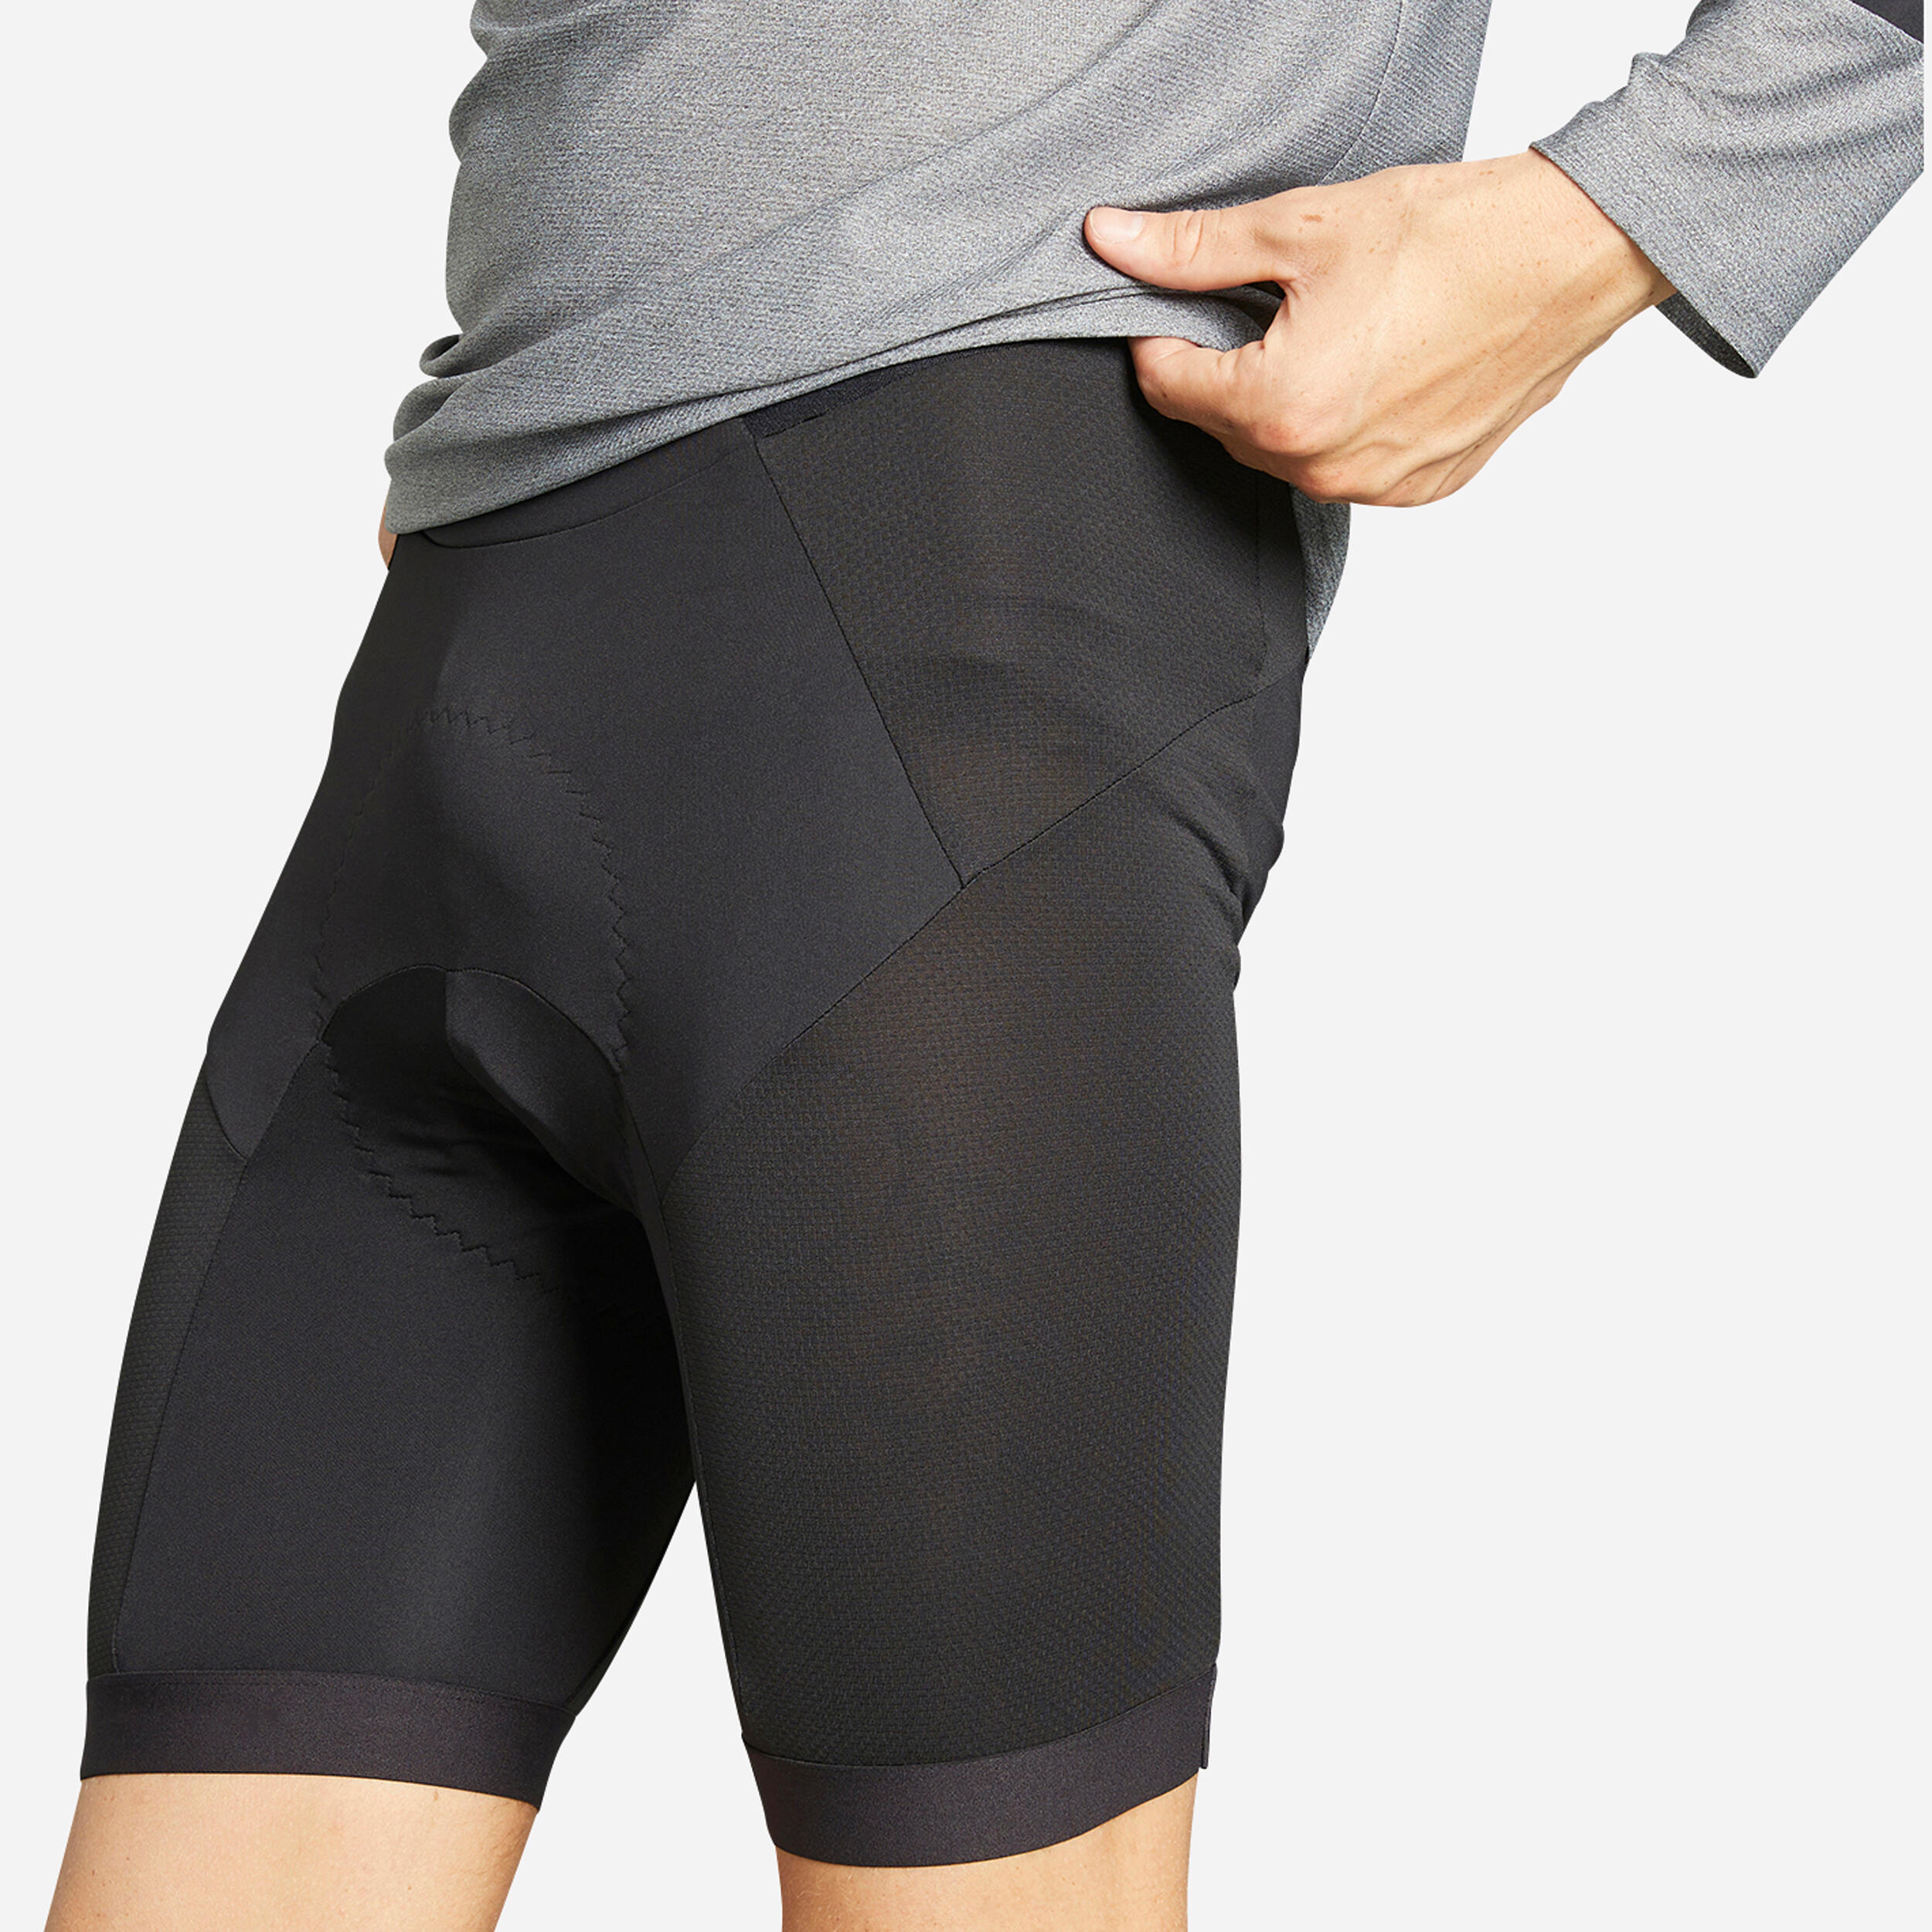 Decathlon cycling pants men's road bike double arrow shorts